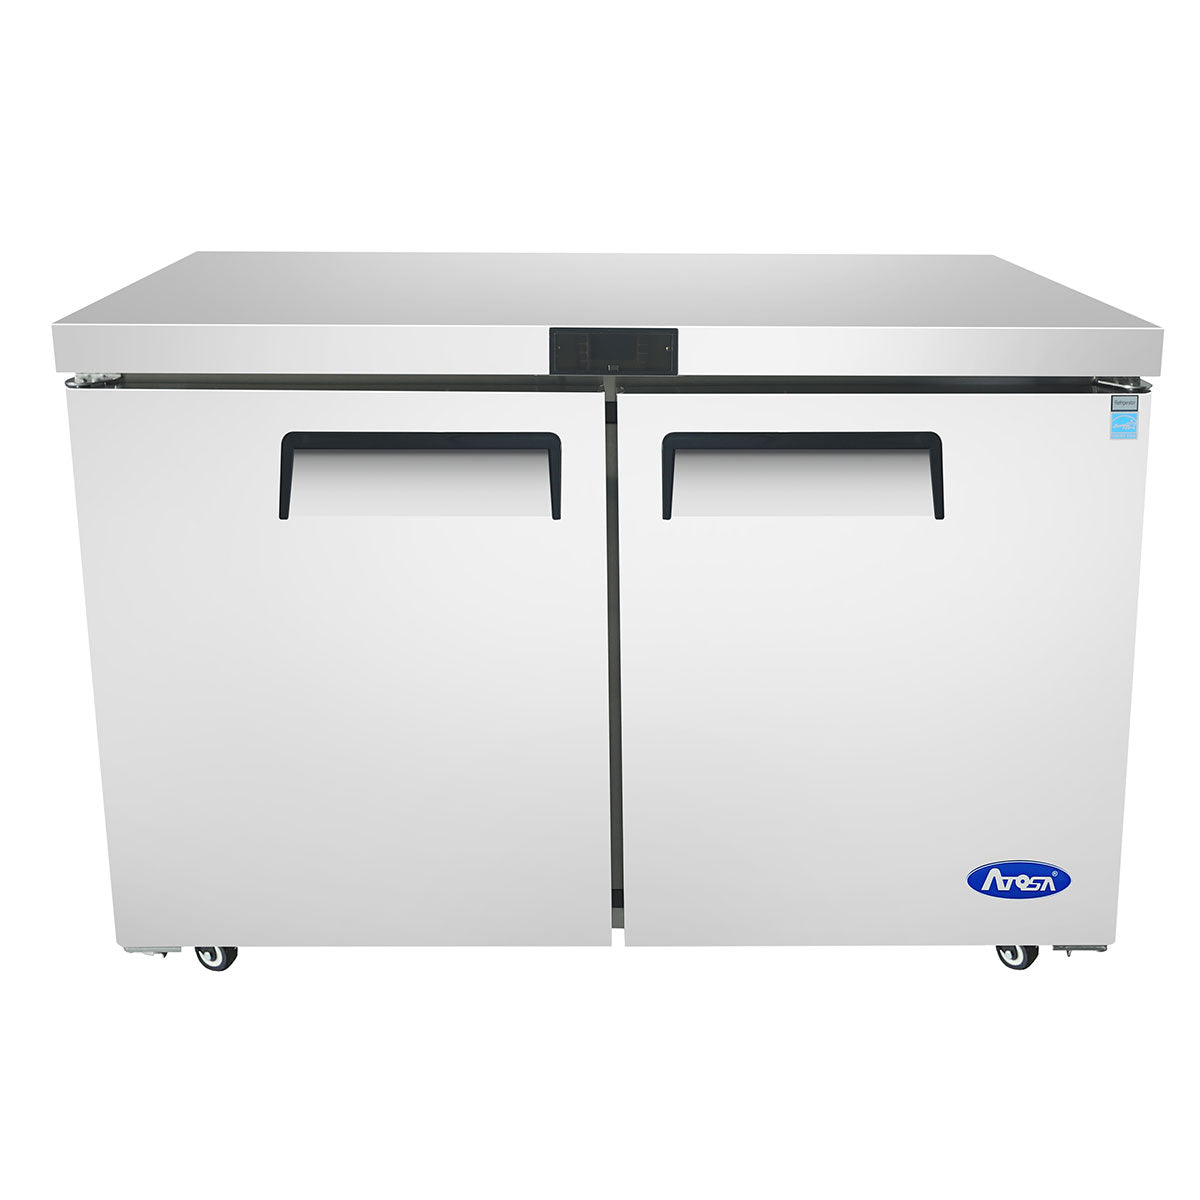 Undercounter Freezer, Commercial Undercounter Freezer